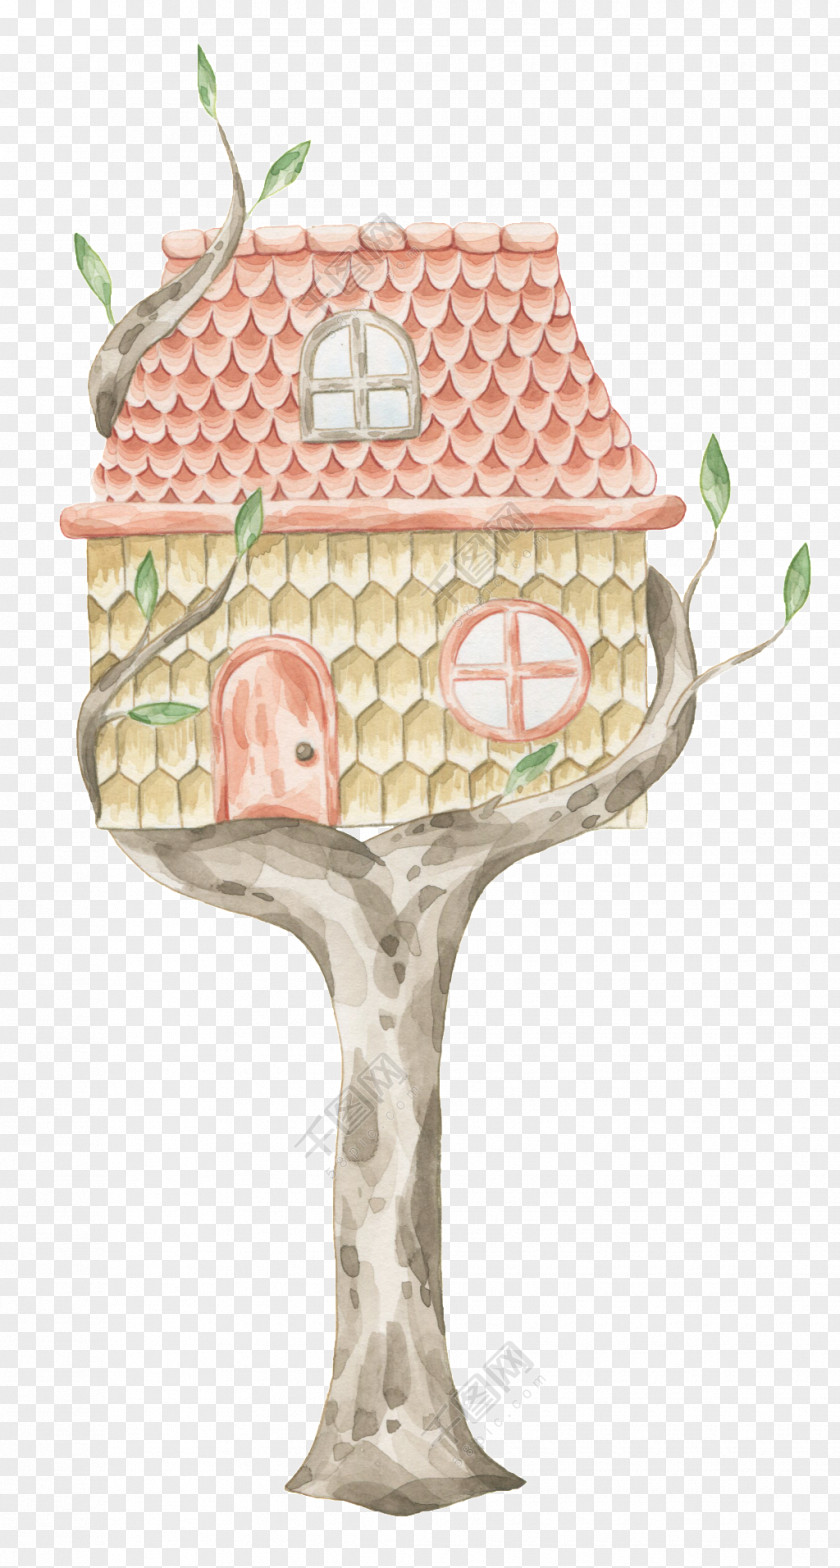 Treehouse Tree House Image Illustration PNG